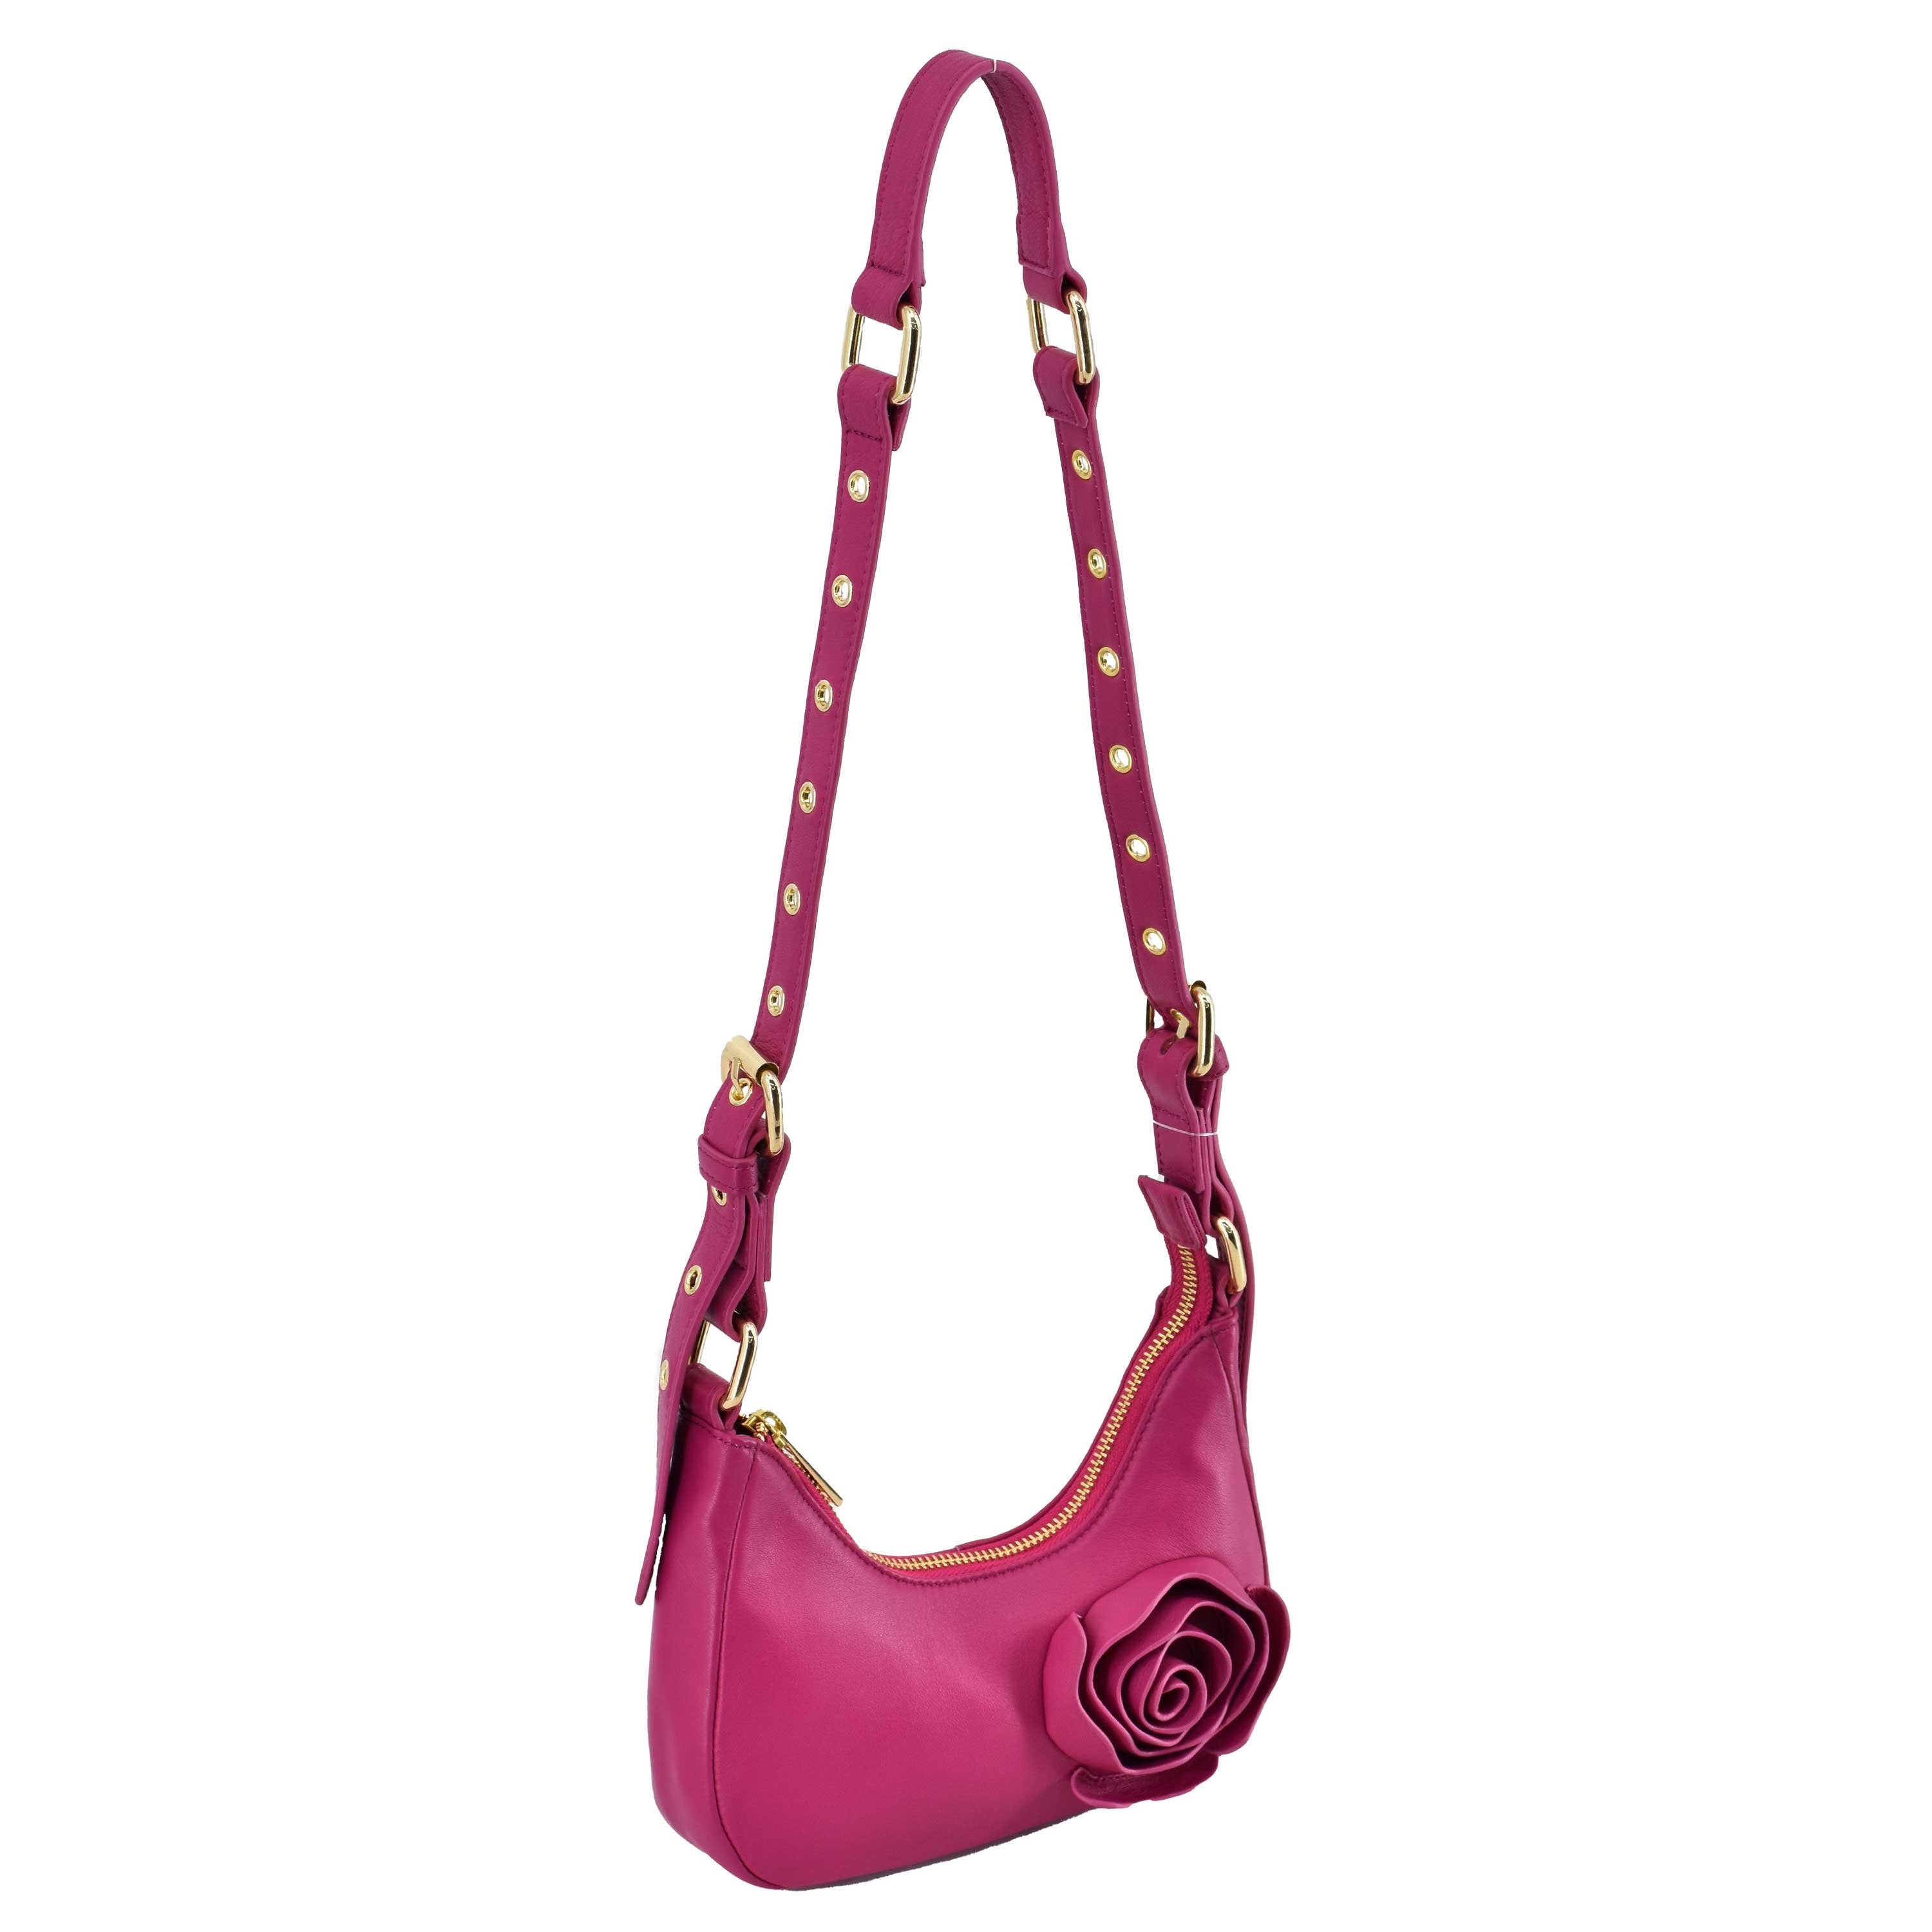 Juicy Couture Hot Neon Pink Shoulder Tote Purse Bag | eBay